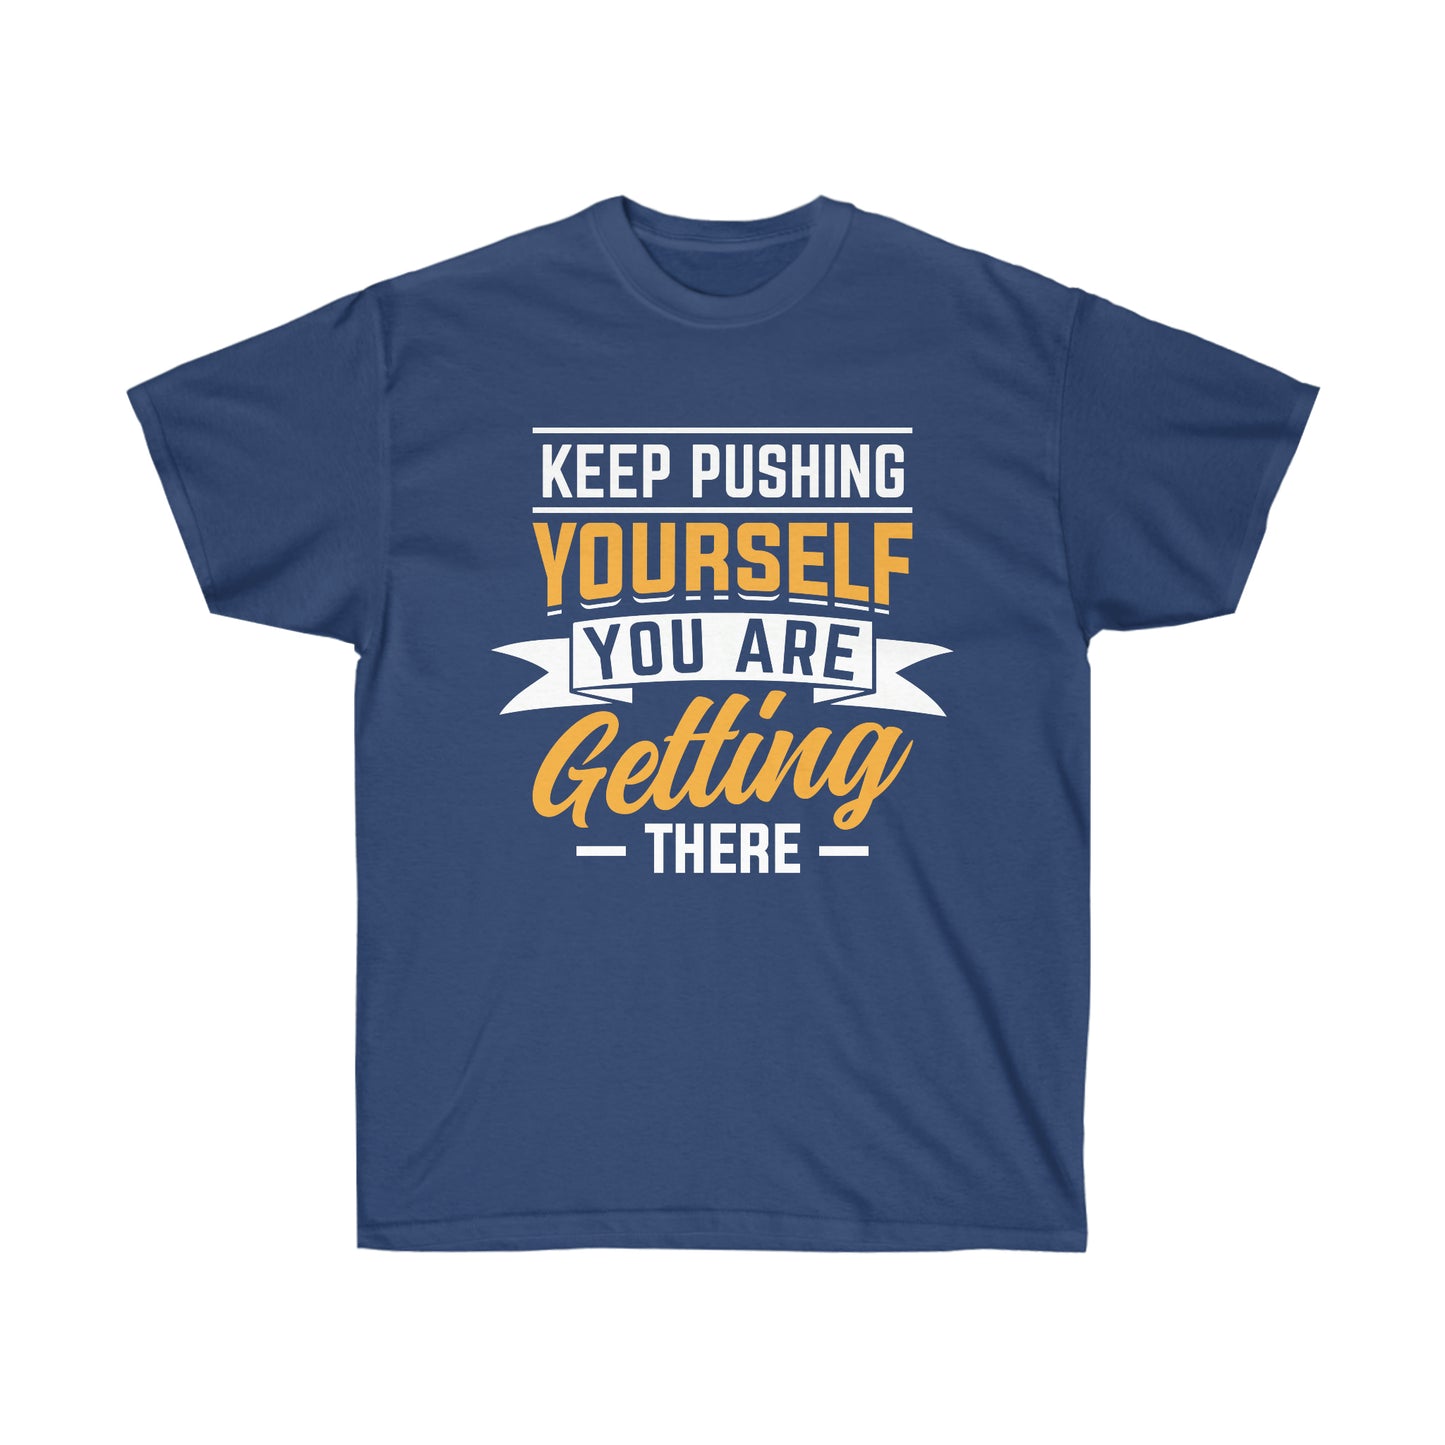 Keep pushing yourself motivational tshirt